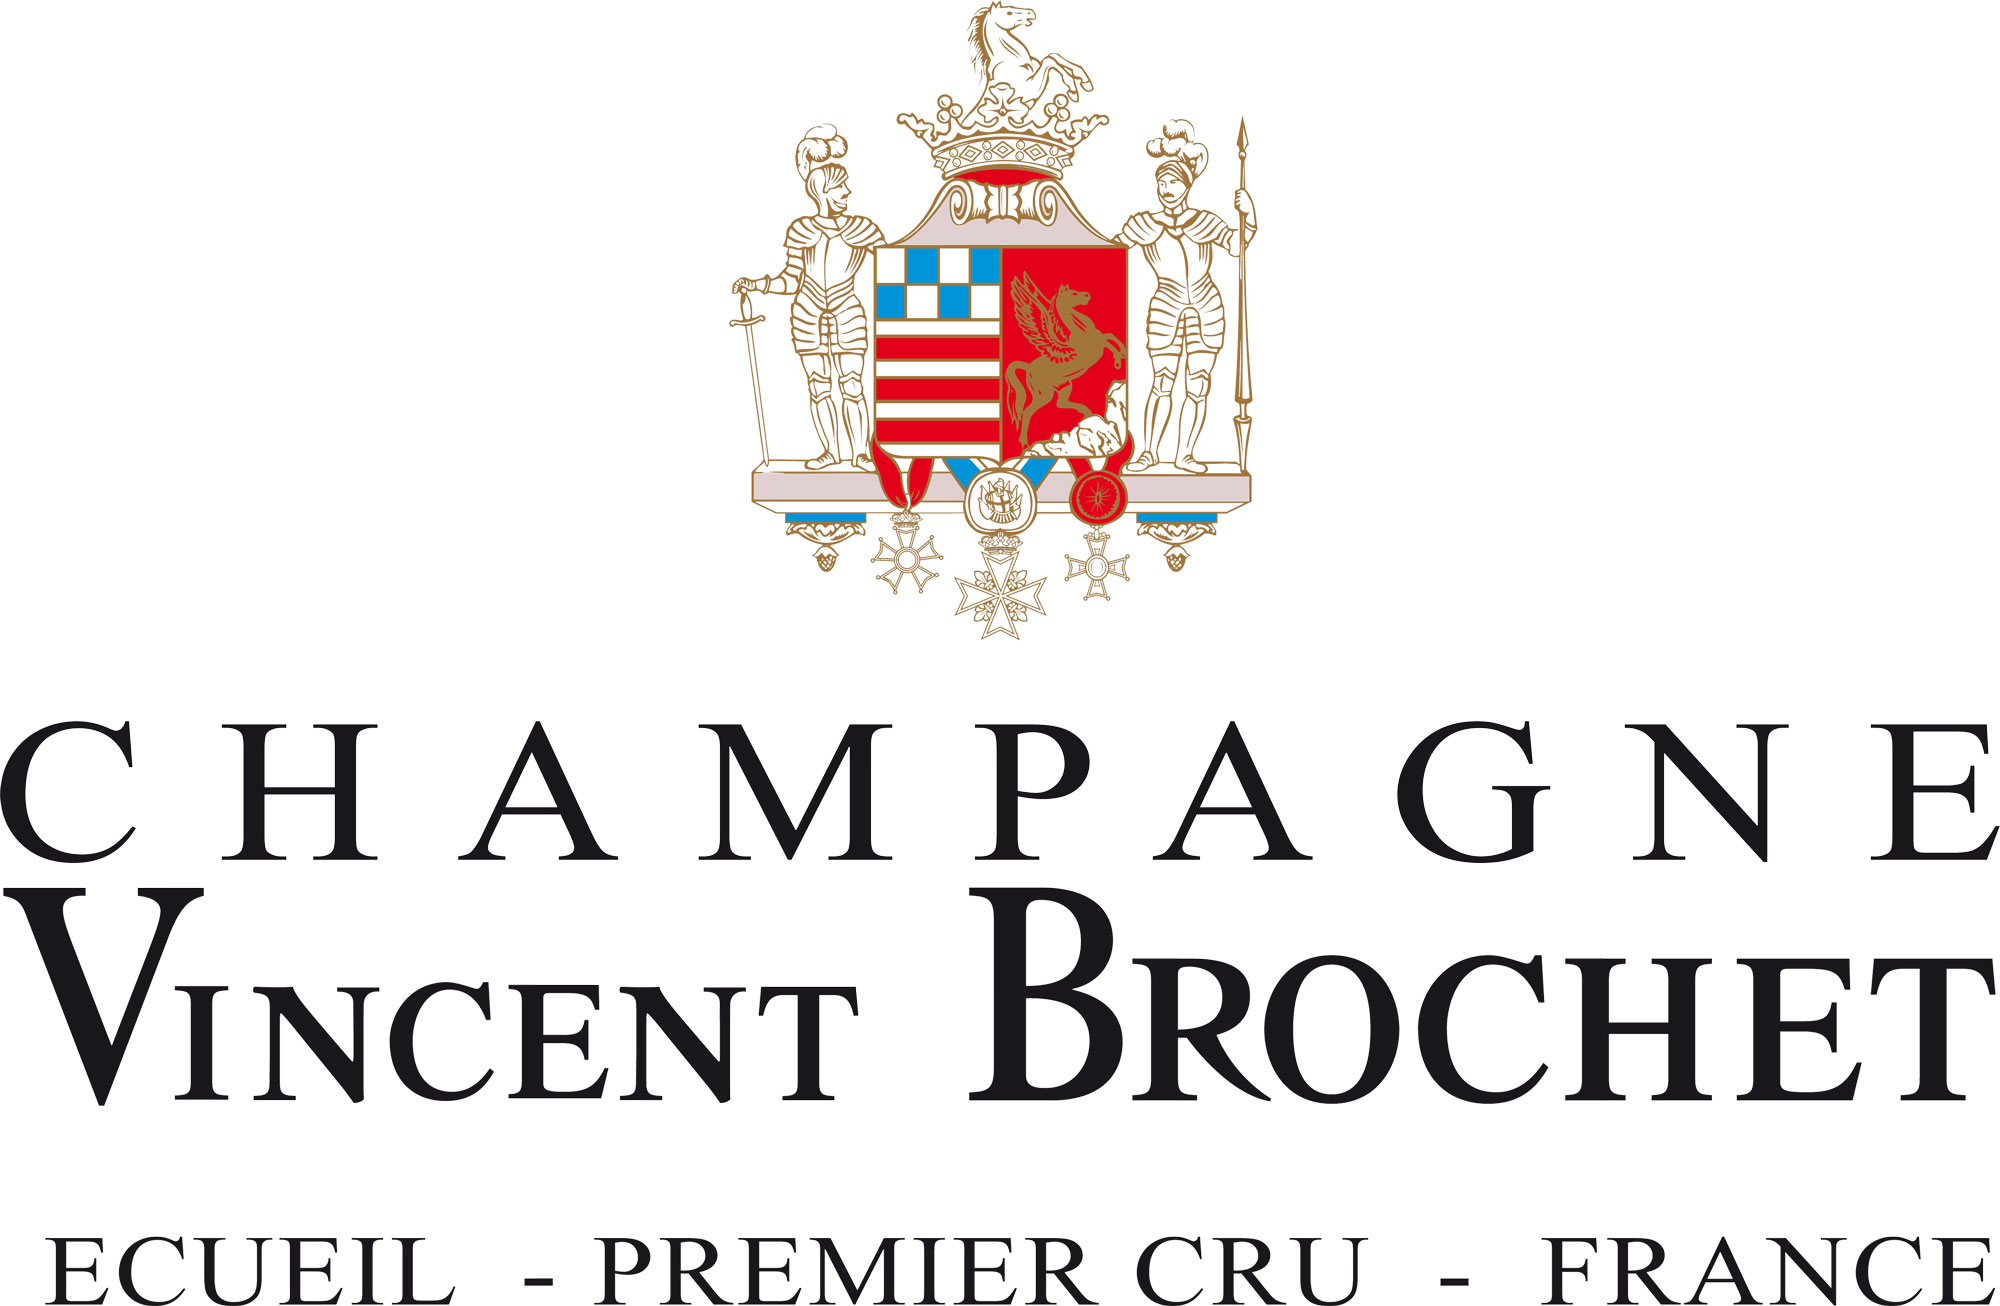 Champagne Vincent Brochet